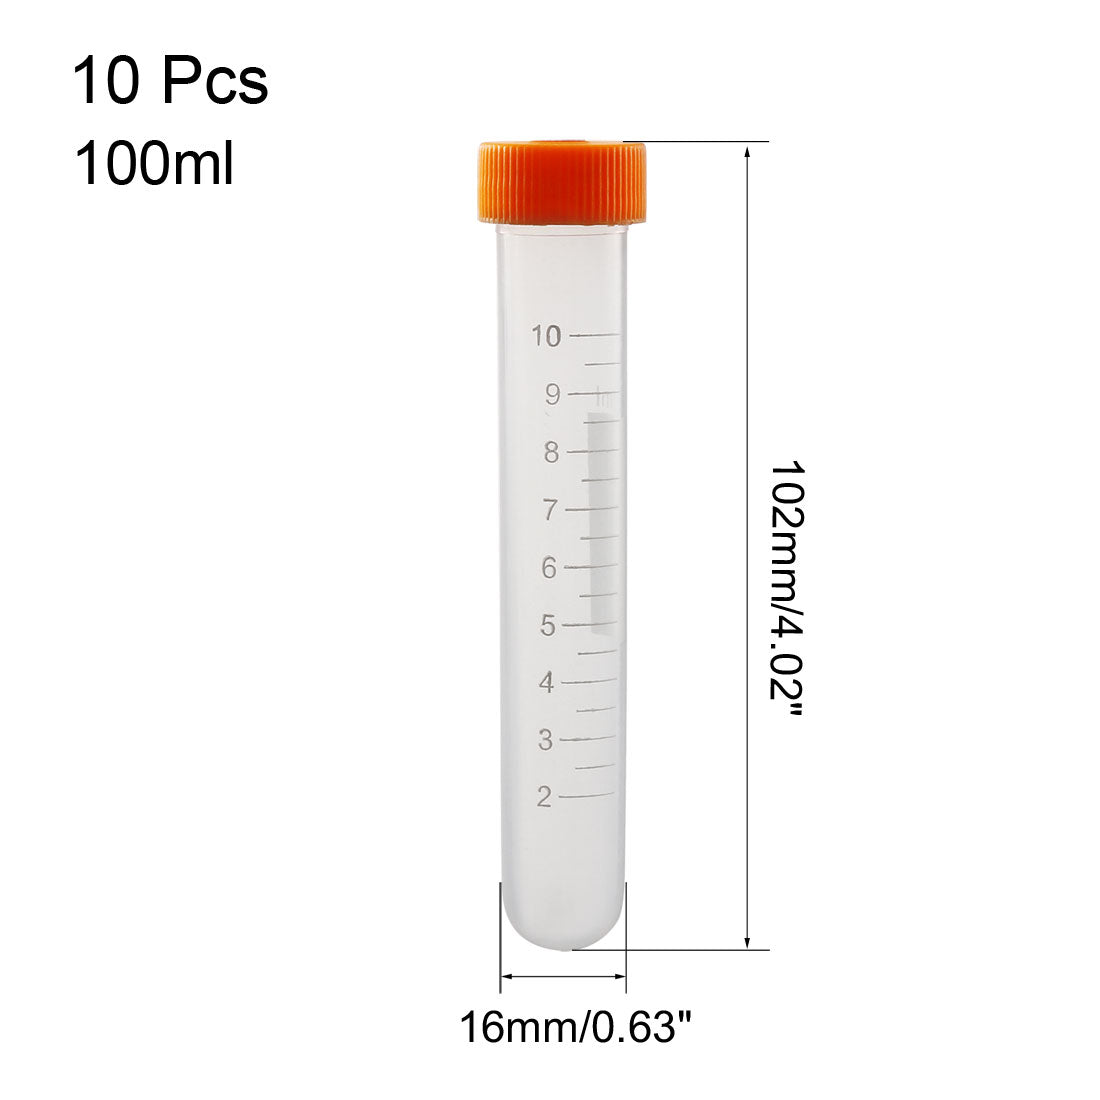 uxcell Uxcell 10 Pcs 10ml Plastic Centrifuge Tubes with Orange Screw Cap, Round Bottom, Graduated Marks